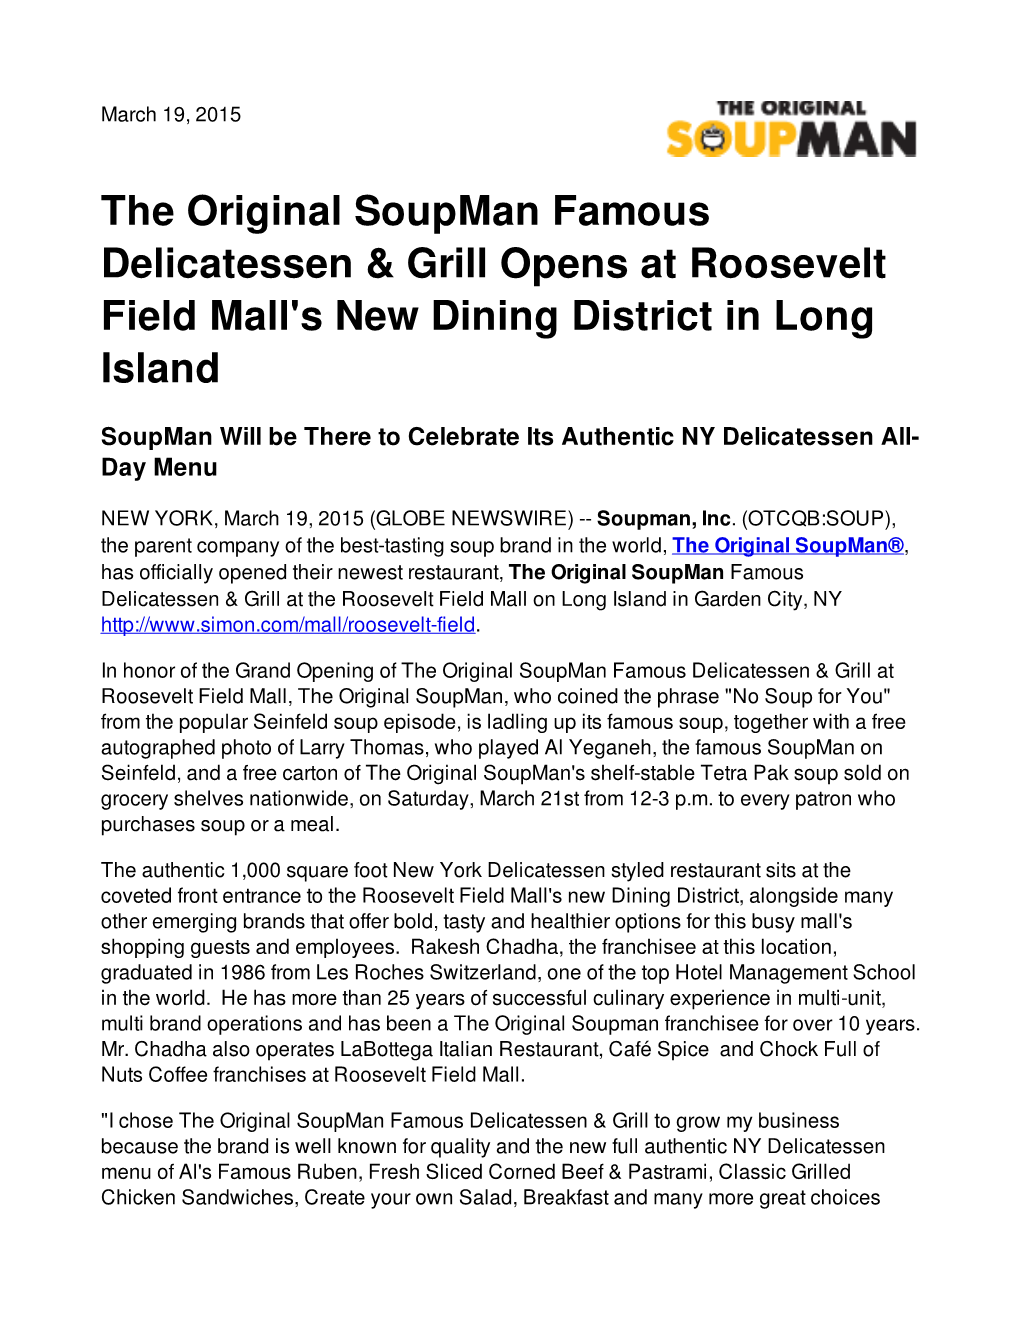 The Original Soupman Famous Delicatessen & Grill Opens At